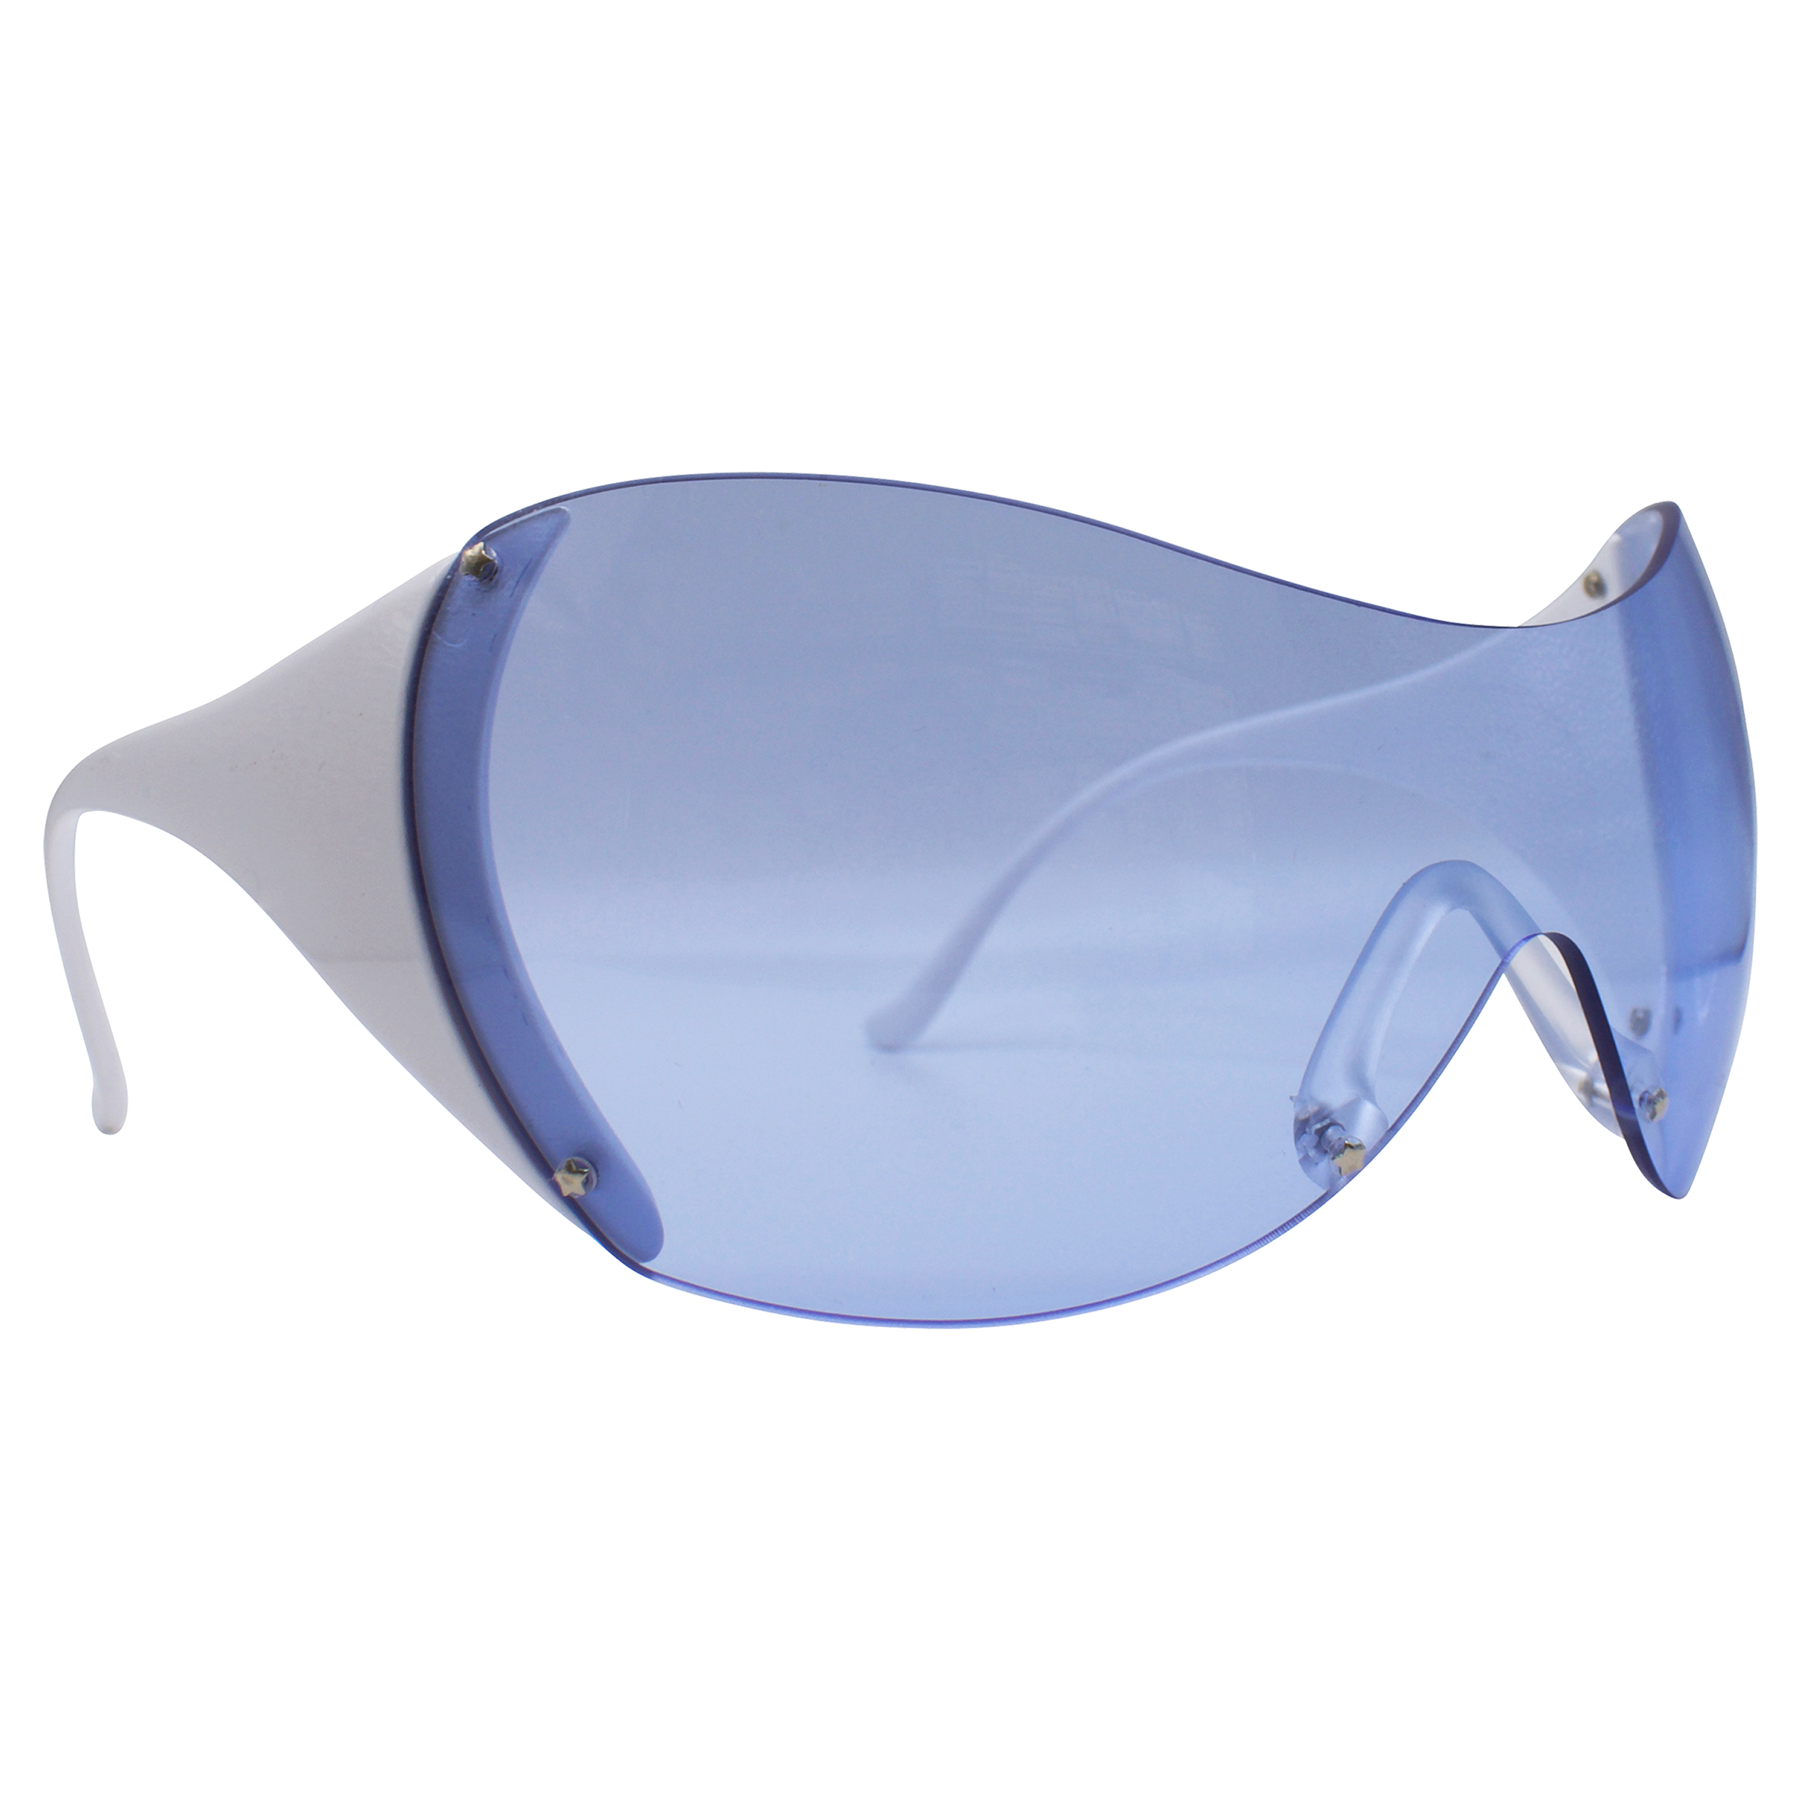 BOOM Shield Sunglasses *As Seen On: Amber Rose & Paris Hilton*